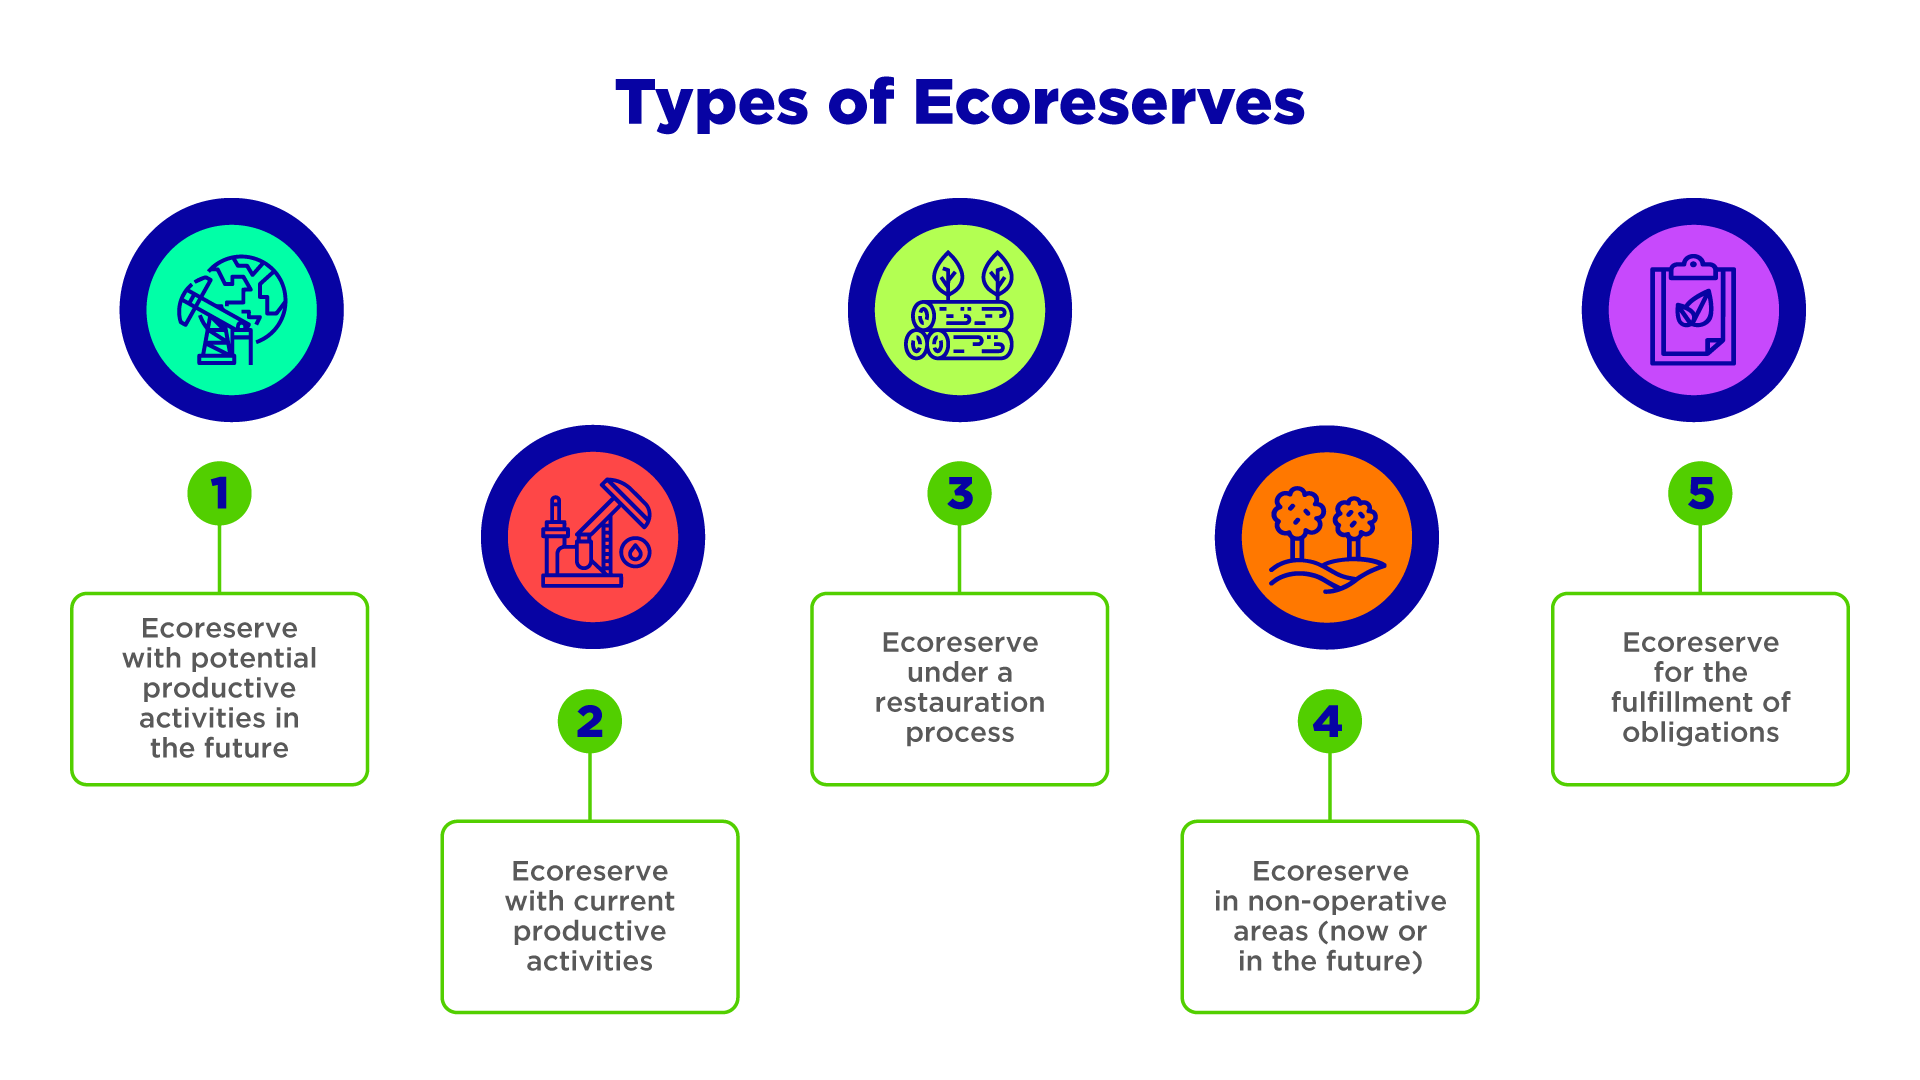 Types of Ecoreserves